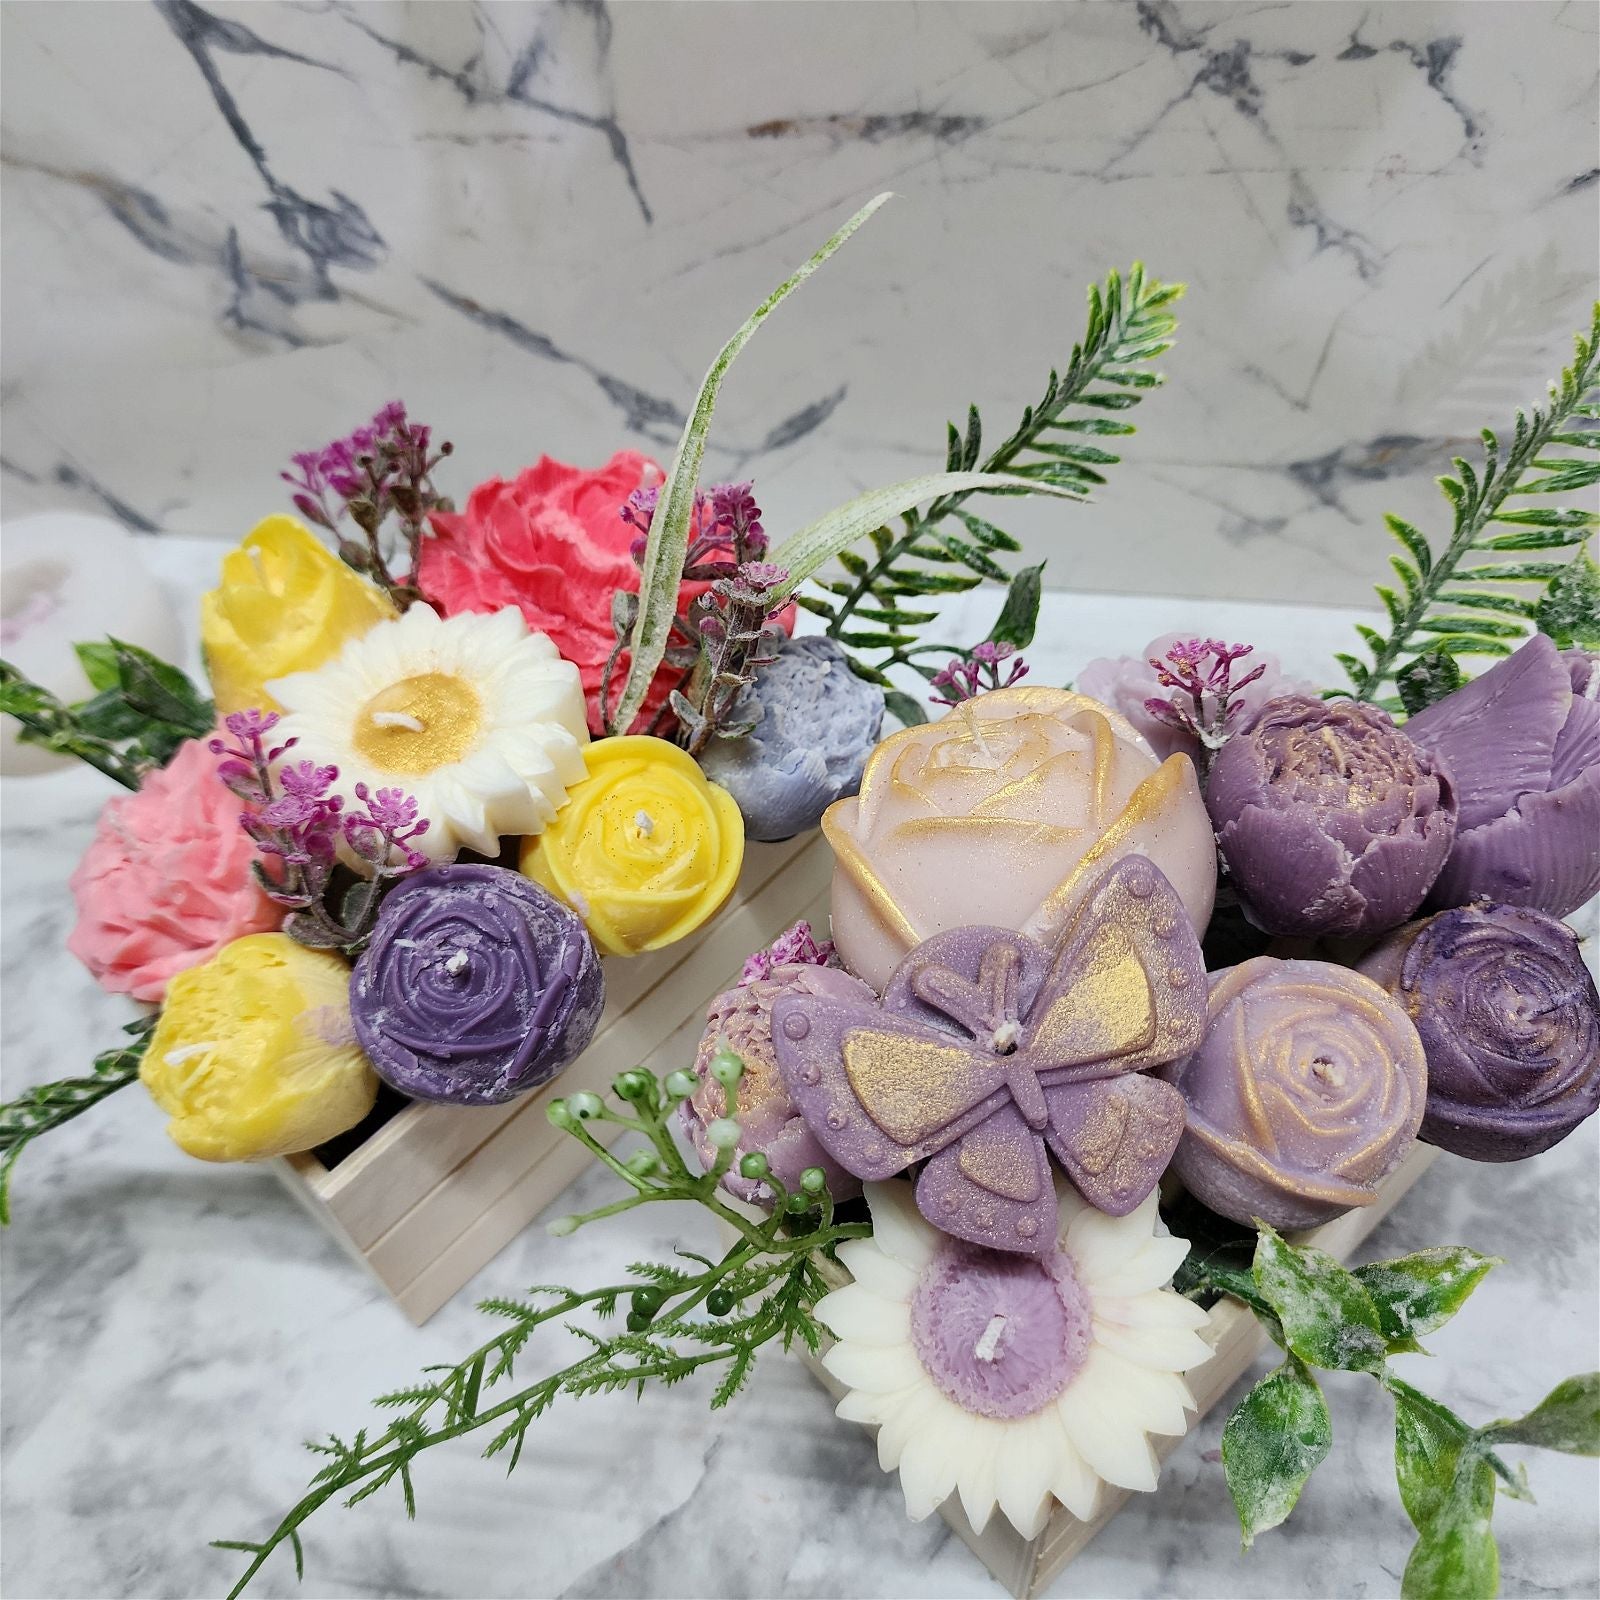 Purple Flower Candles Arrangement | Premium Soy Wax | Handcrafted Floral Candle Centerpiece | Wedding | Home Decor - D SCENT 